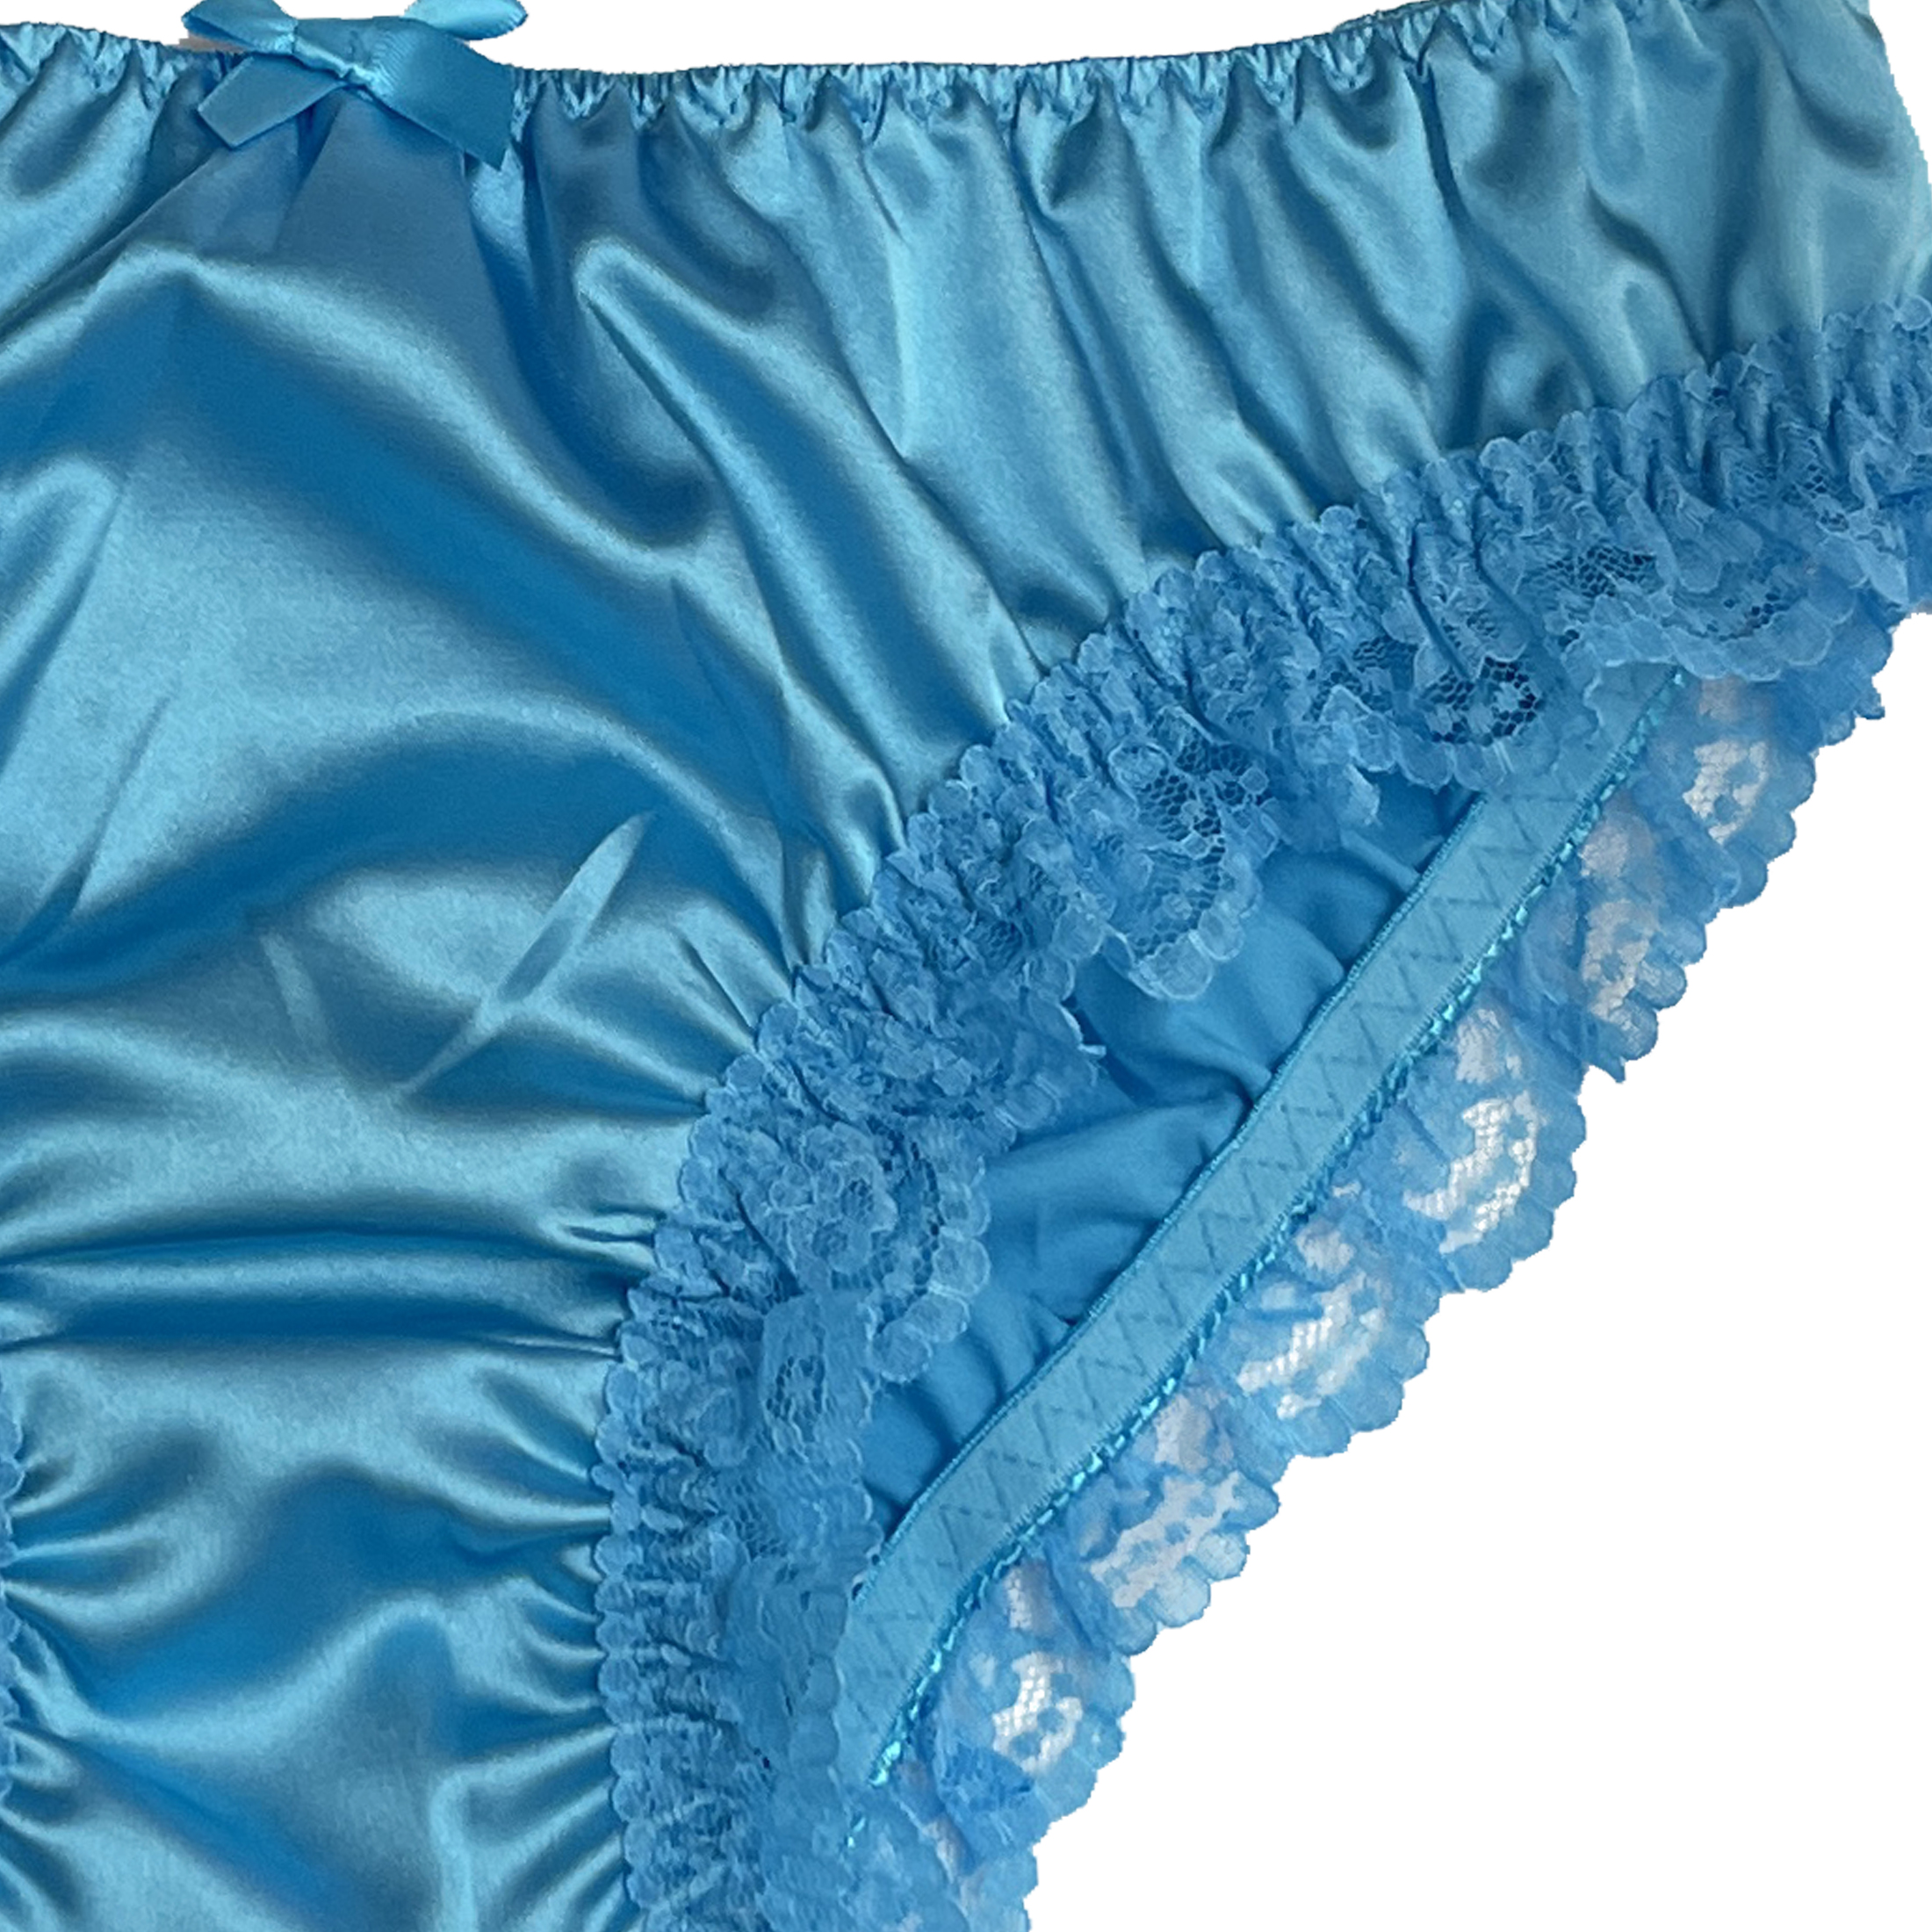 Satin Lace Frilly Sissy Cdtv Full Panties Knicker Briefs Underwear Size S Xxl Ebay 5189